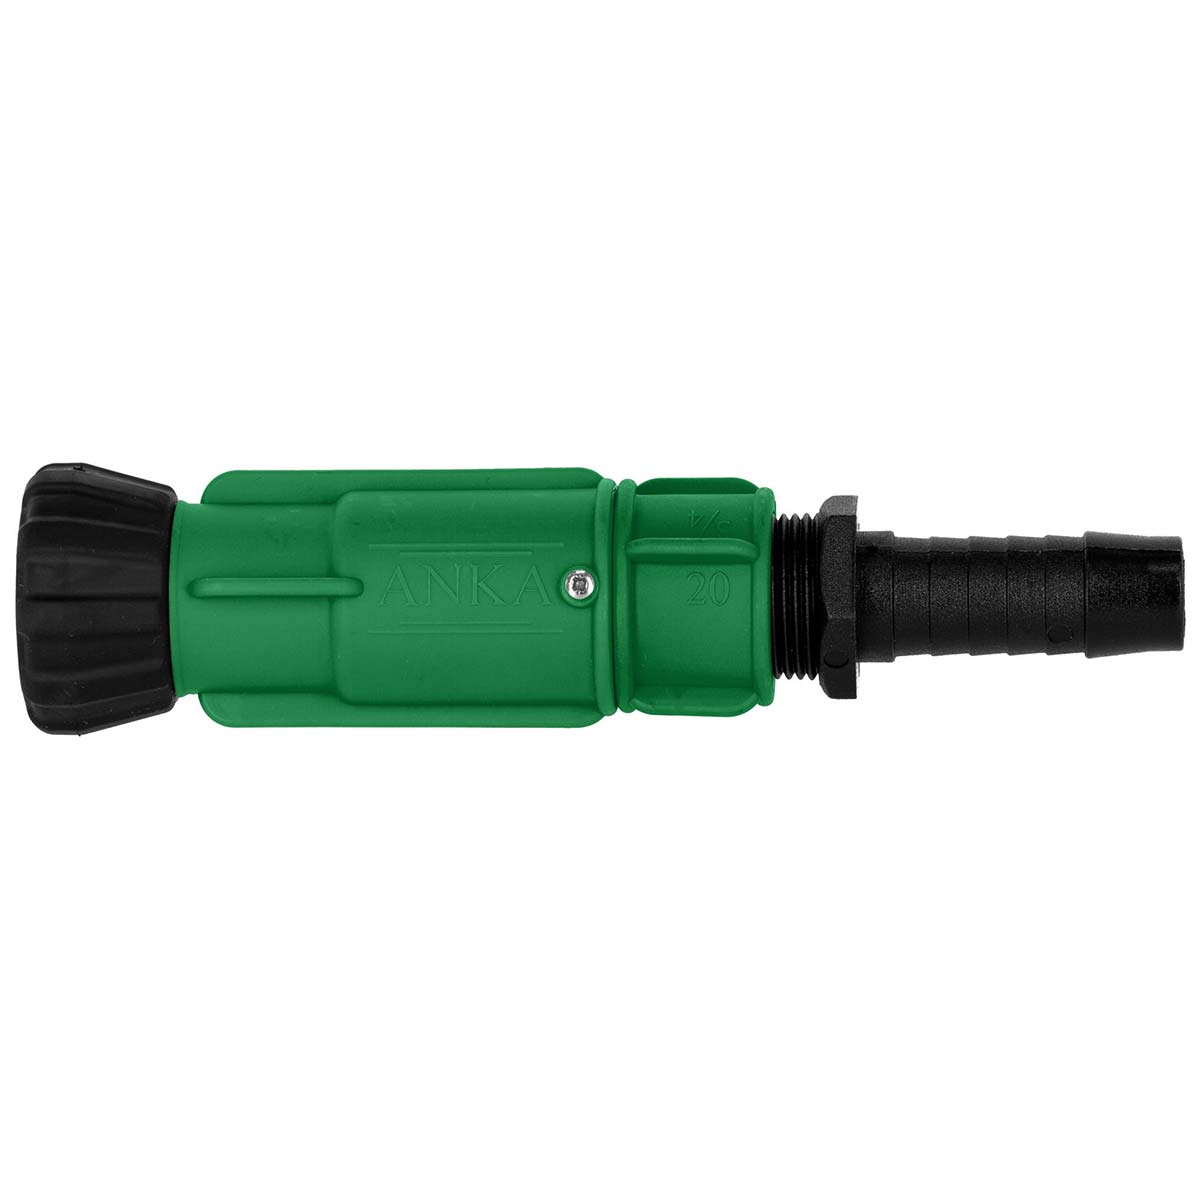 Spray Jet Anka with hose connection